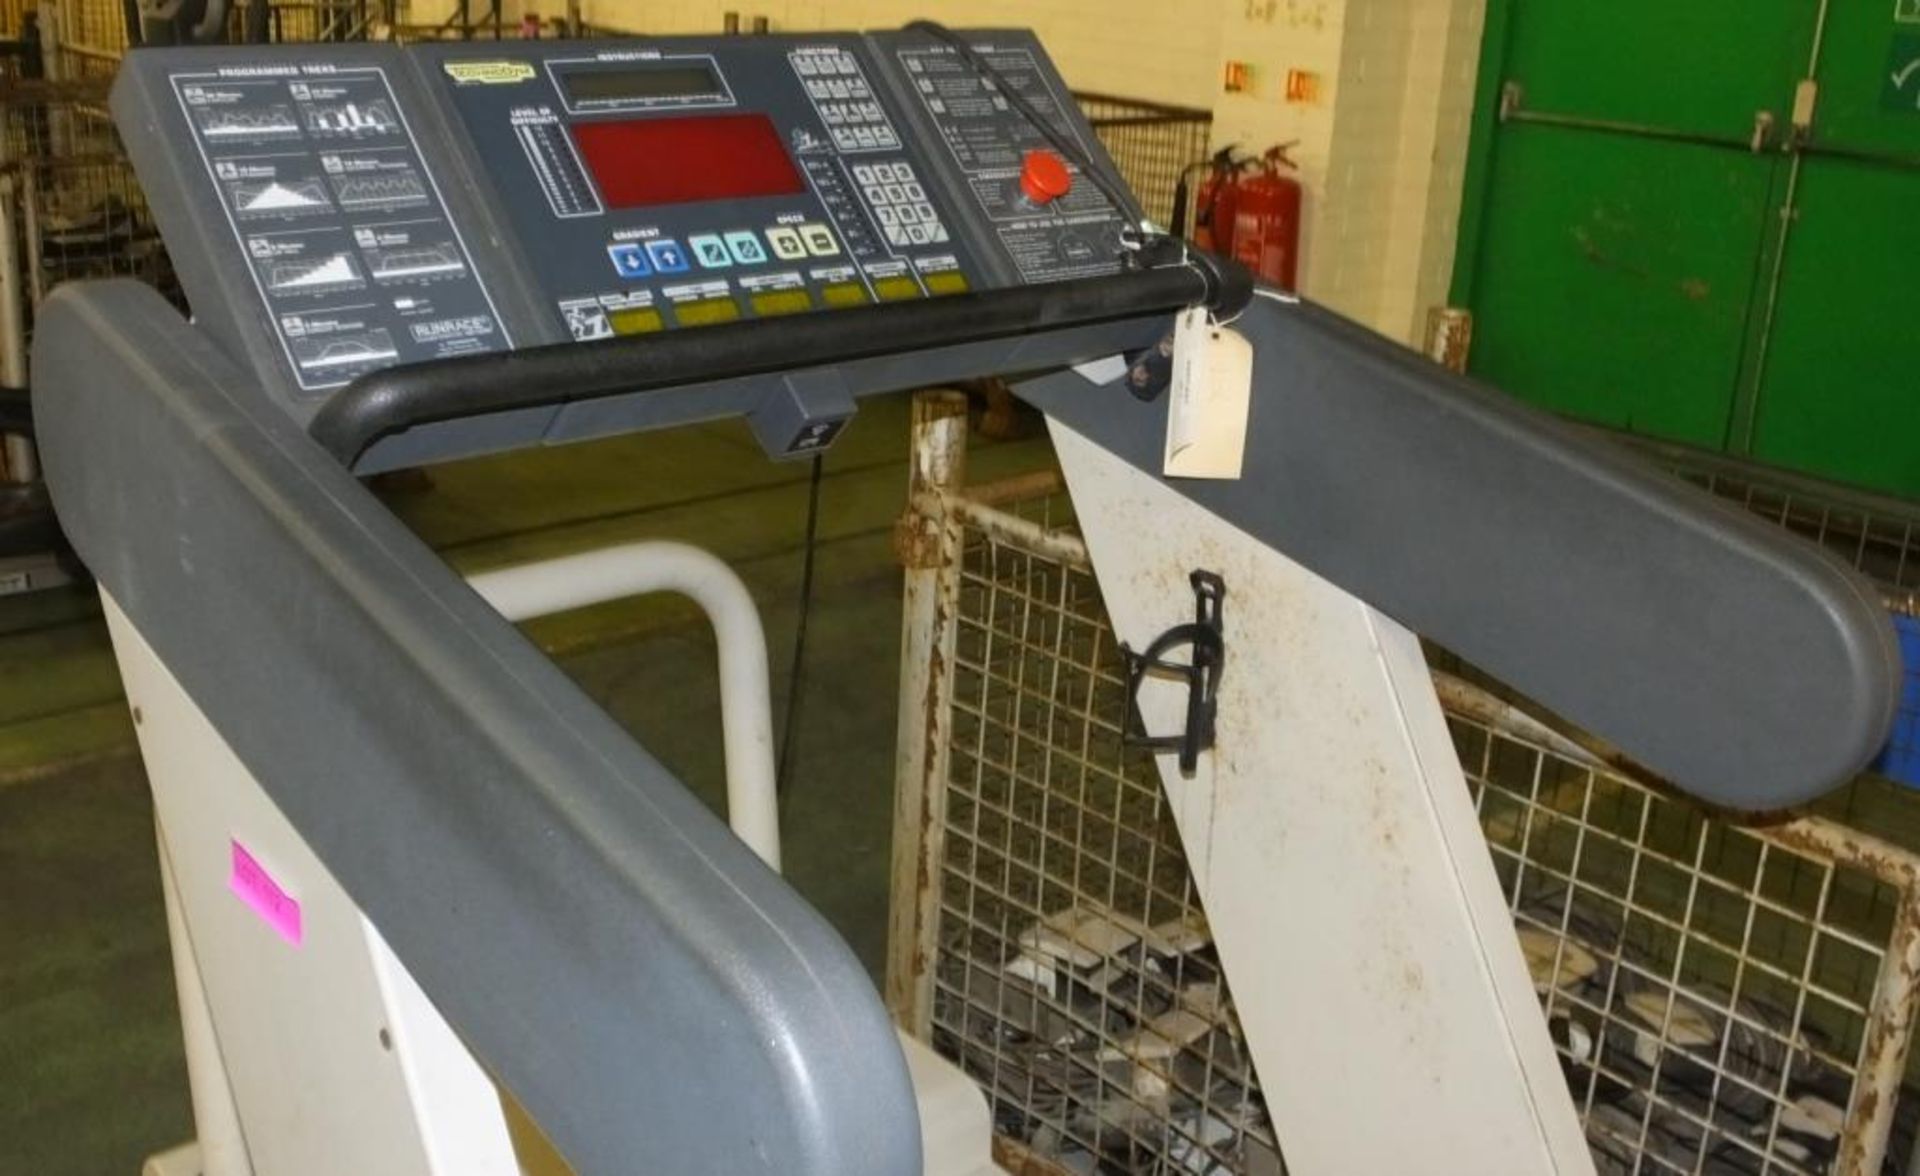 TechnoGym Run Race Treadmill - Image 2 of 3